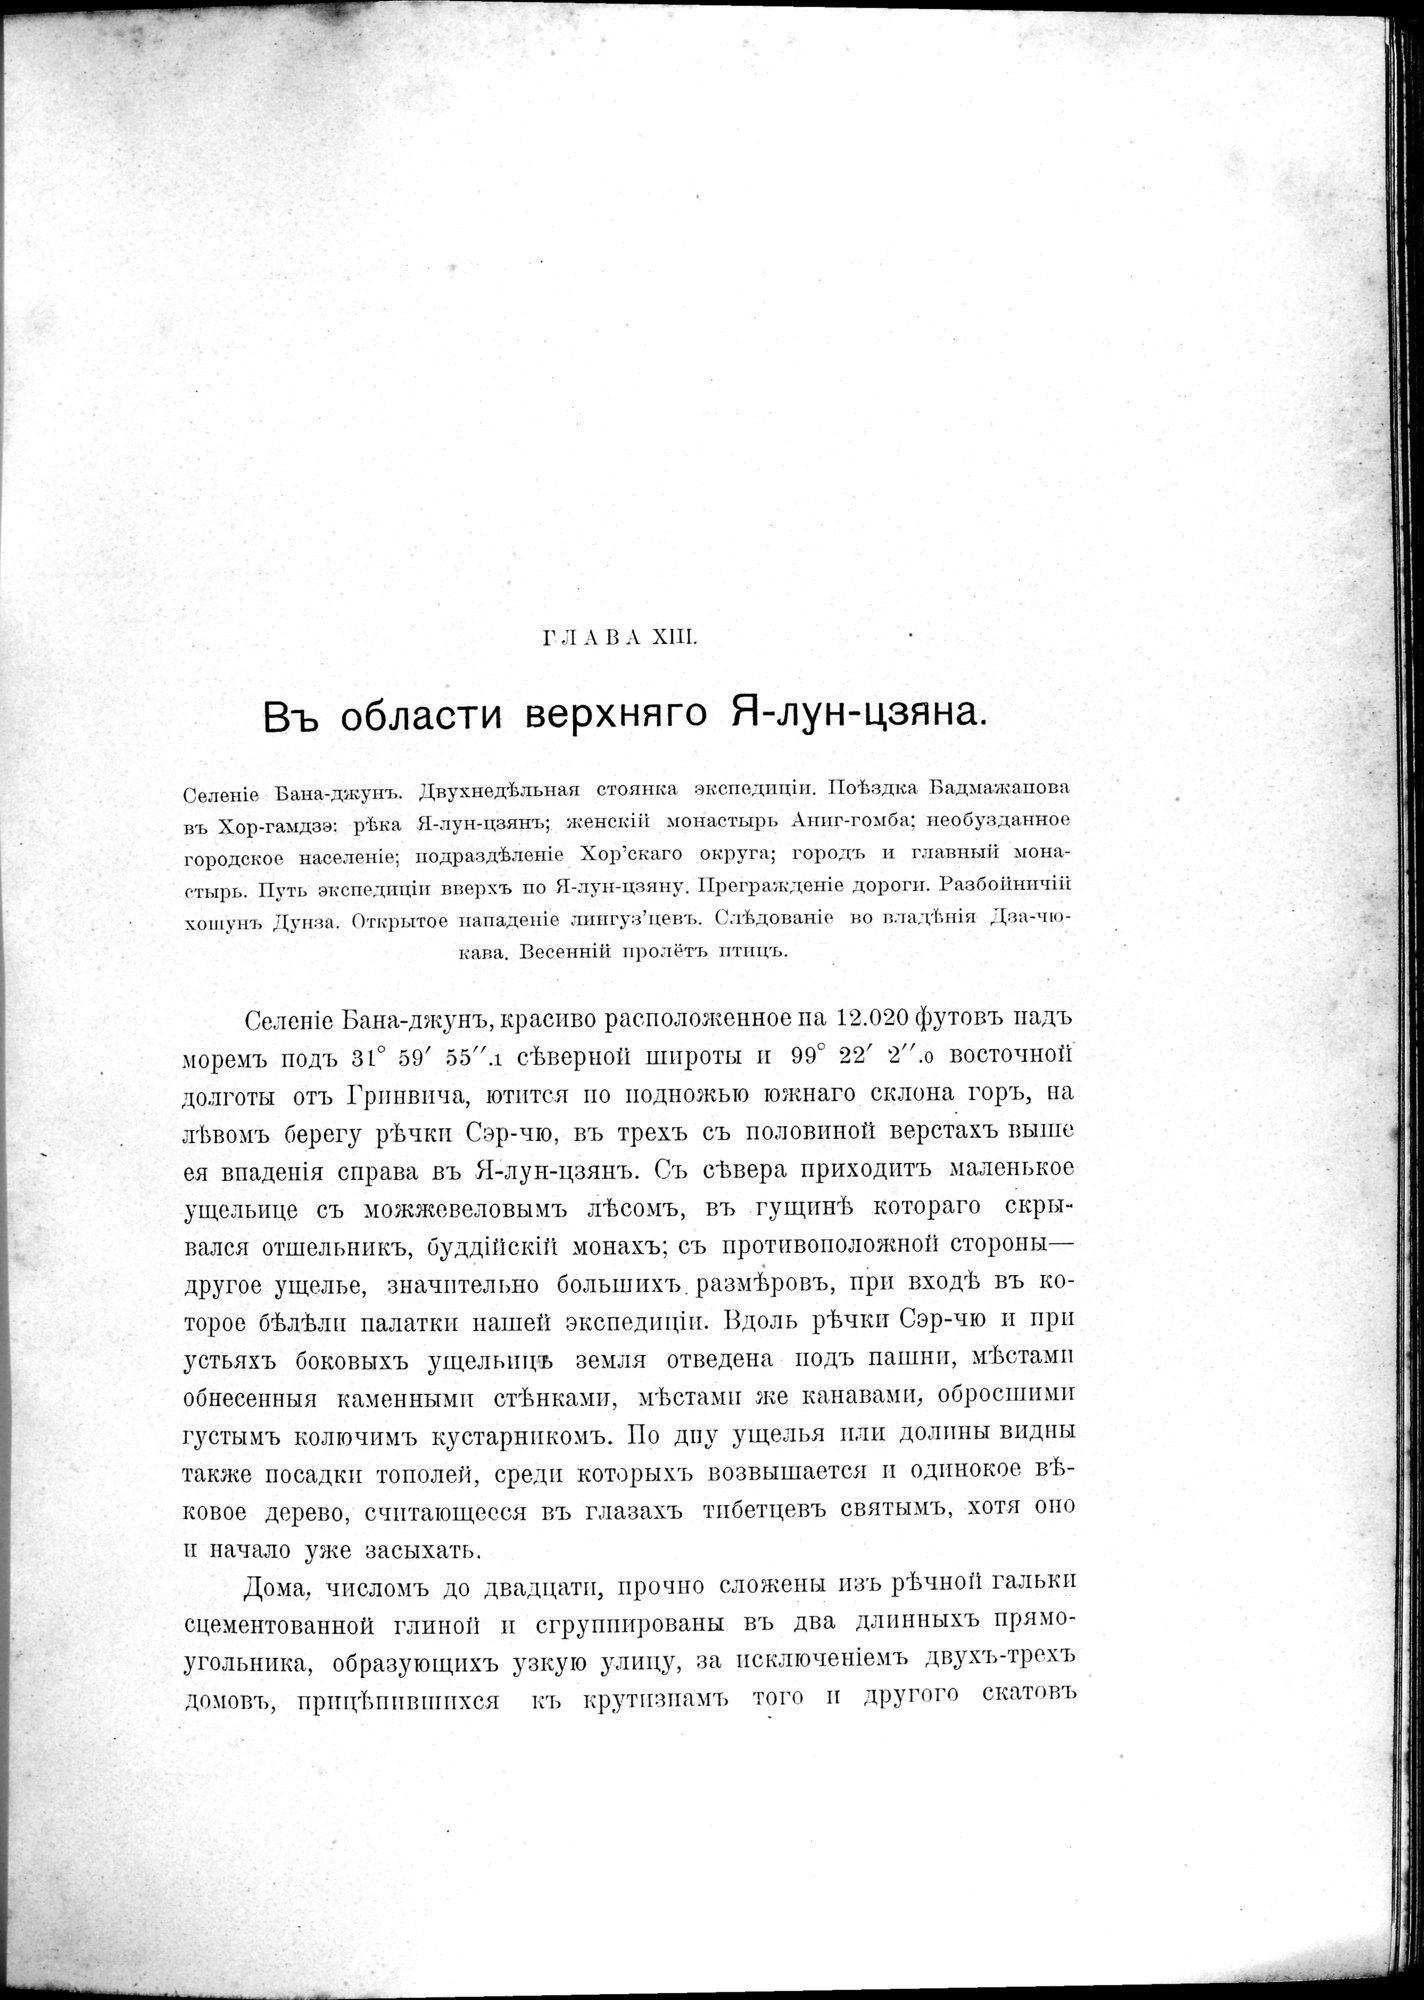 Mongoliia i Kam : vol.2 / Page 325 (Grayscale High Resolution Image)